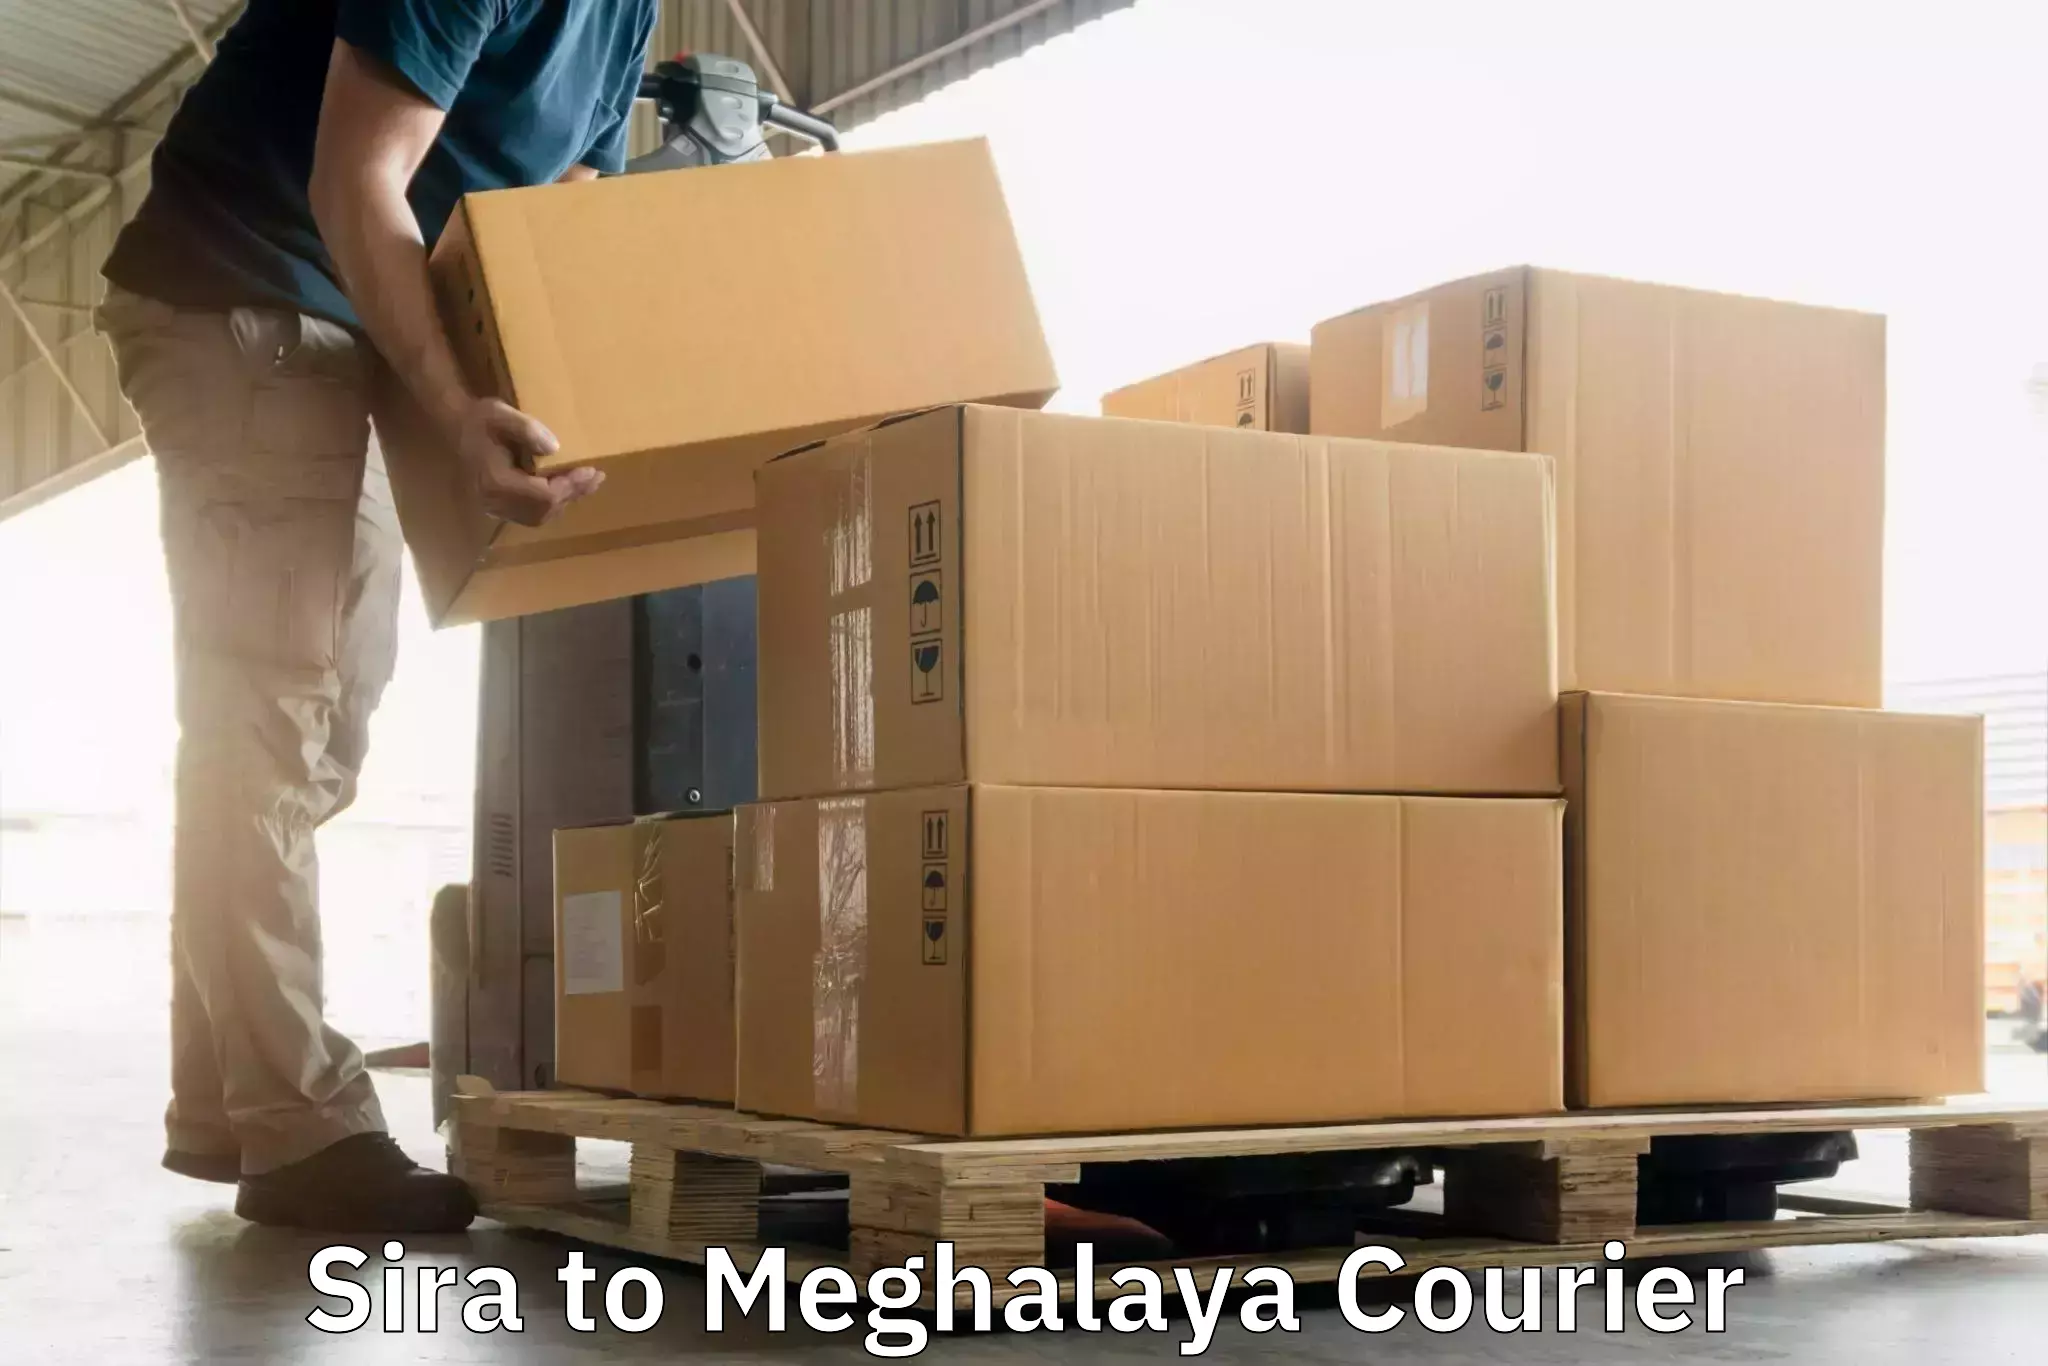 Courier service comparison in Sira to Cherrapunji